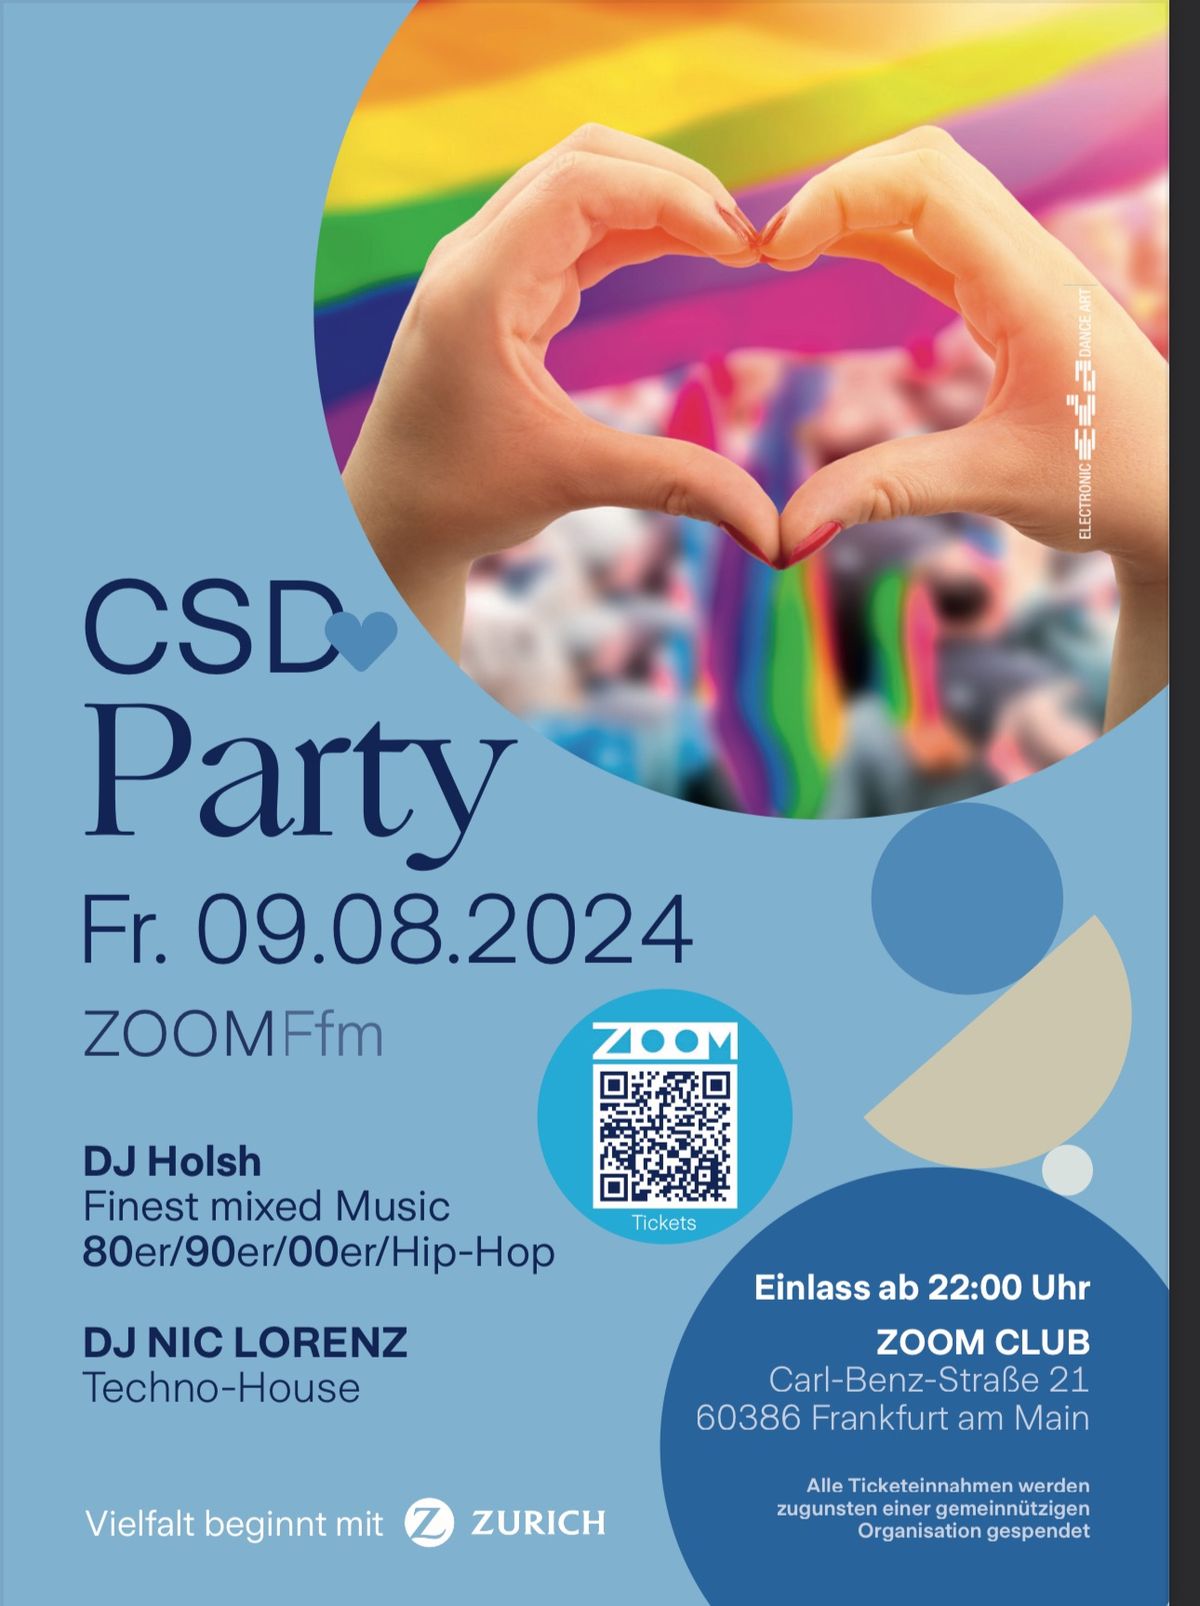 CSD Party 2024 - ZOOM Frankfurt am Main